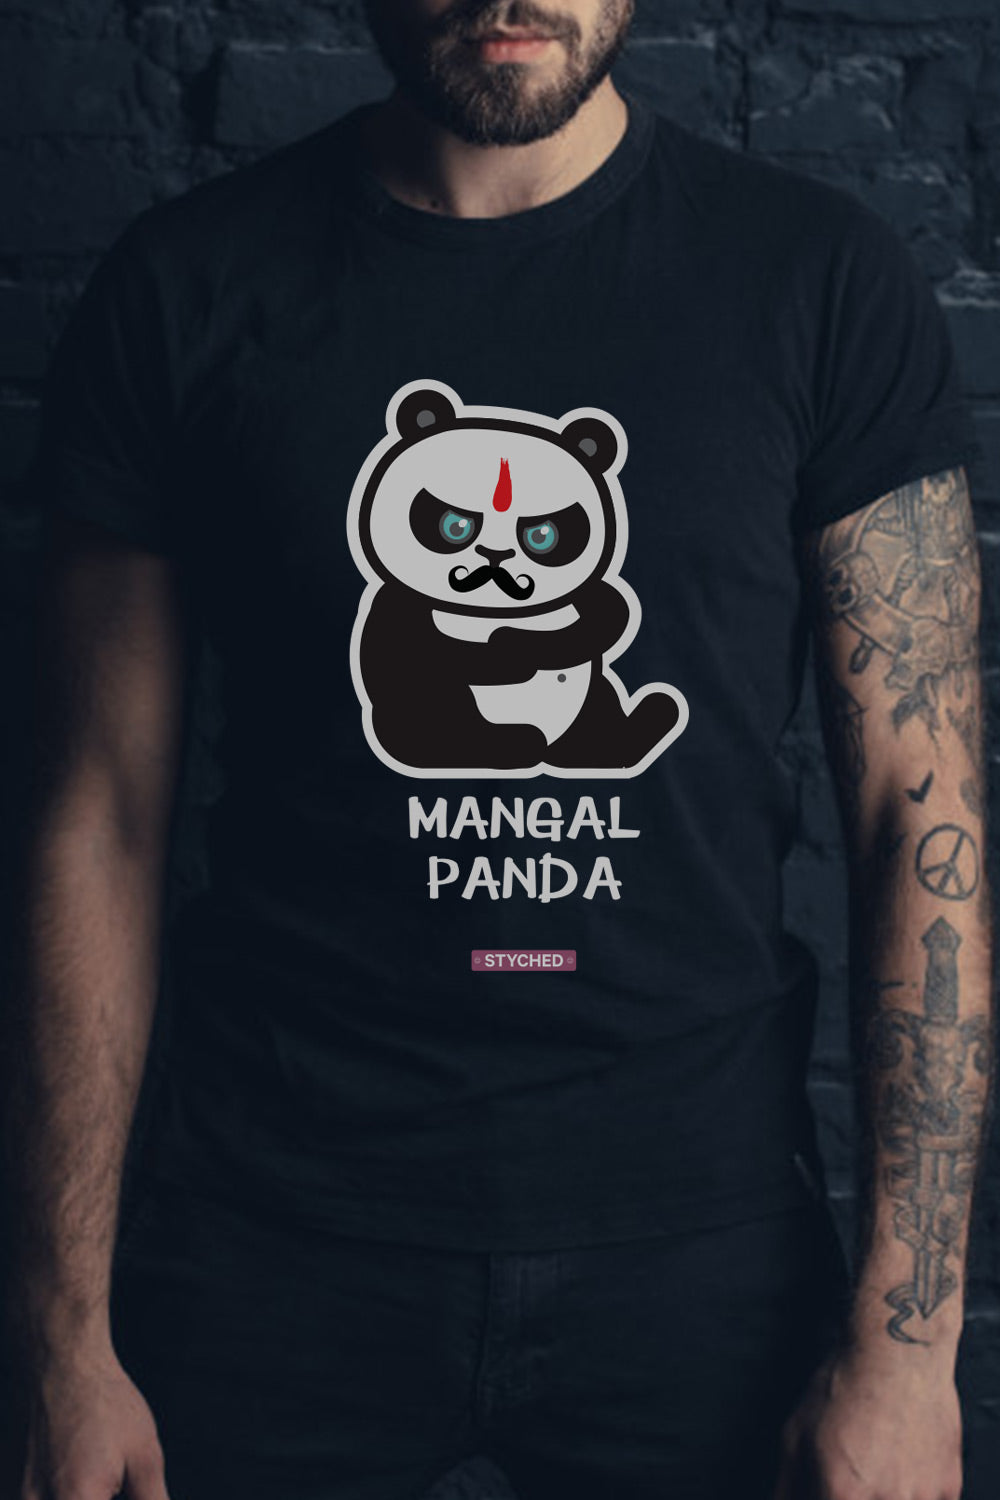 Mangal Panda Graphic T-Shirt Black Color